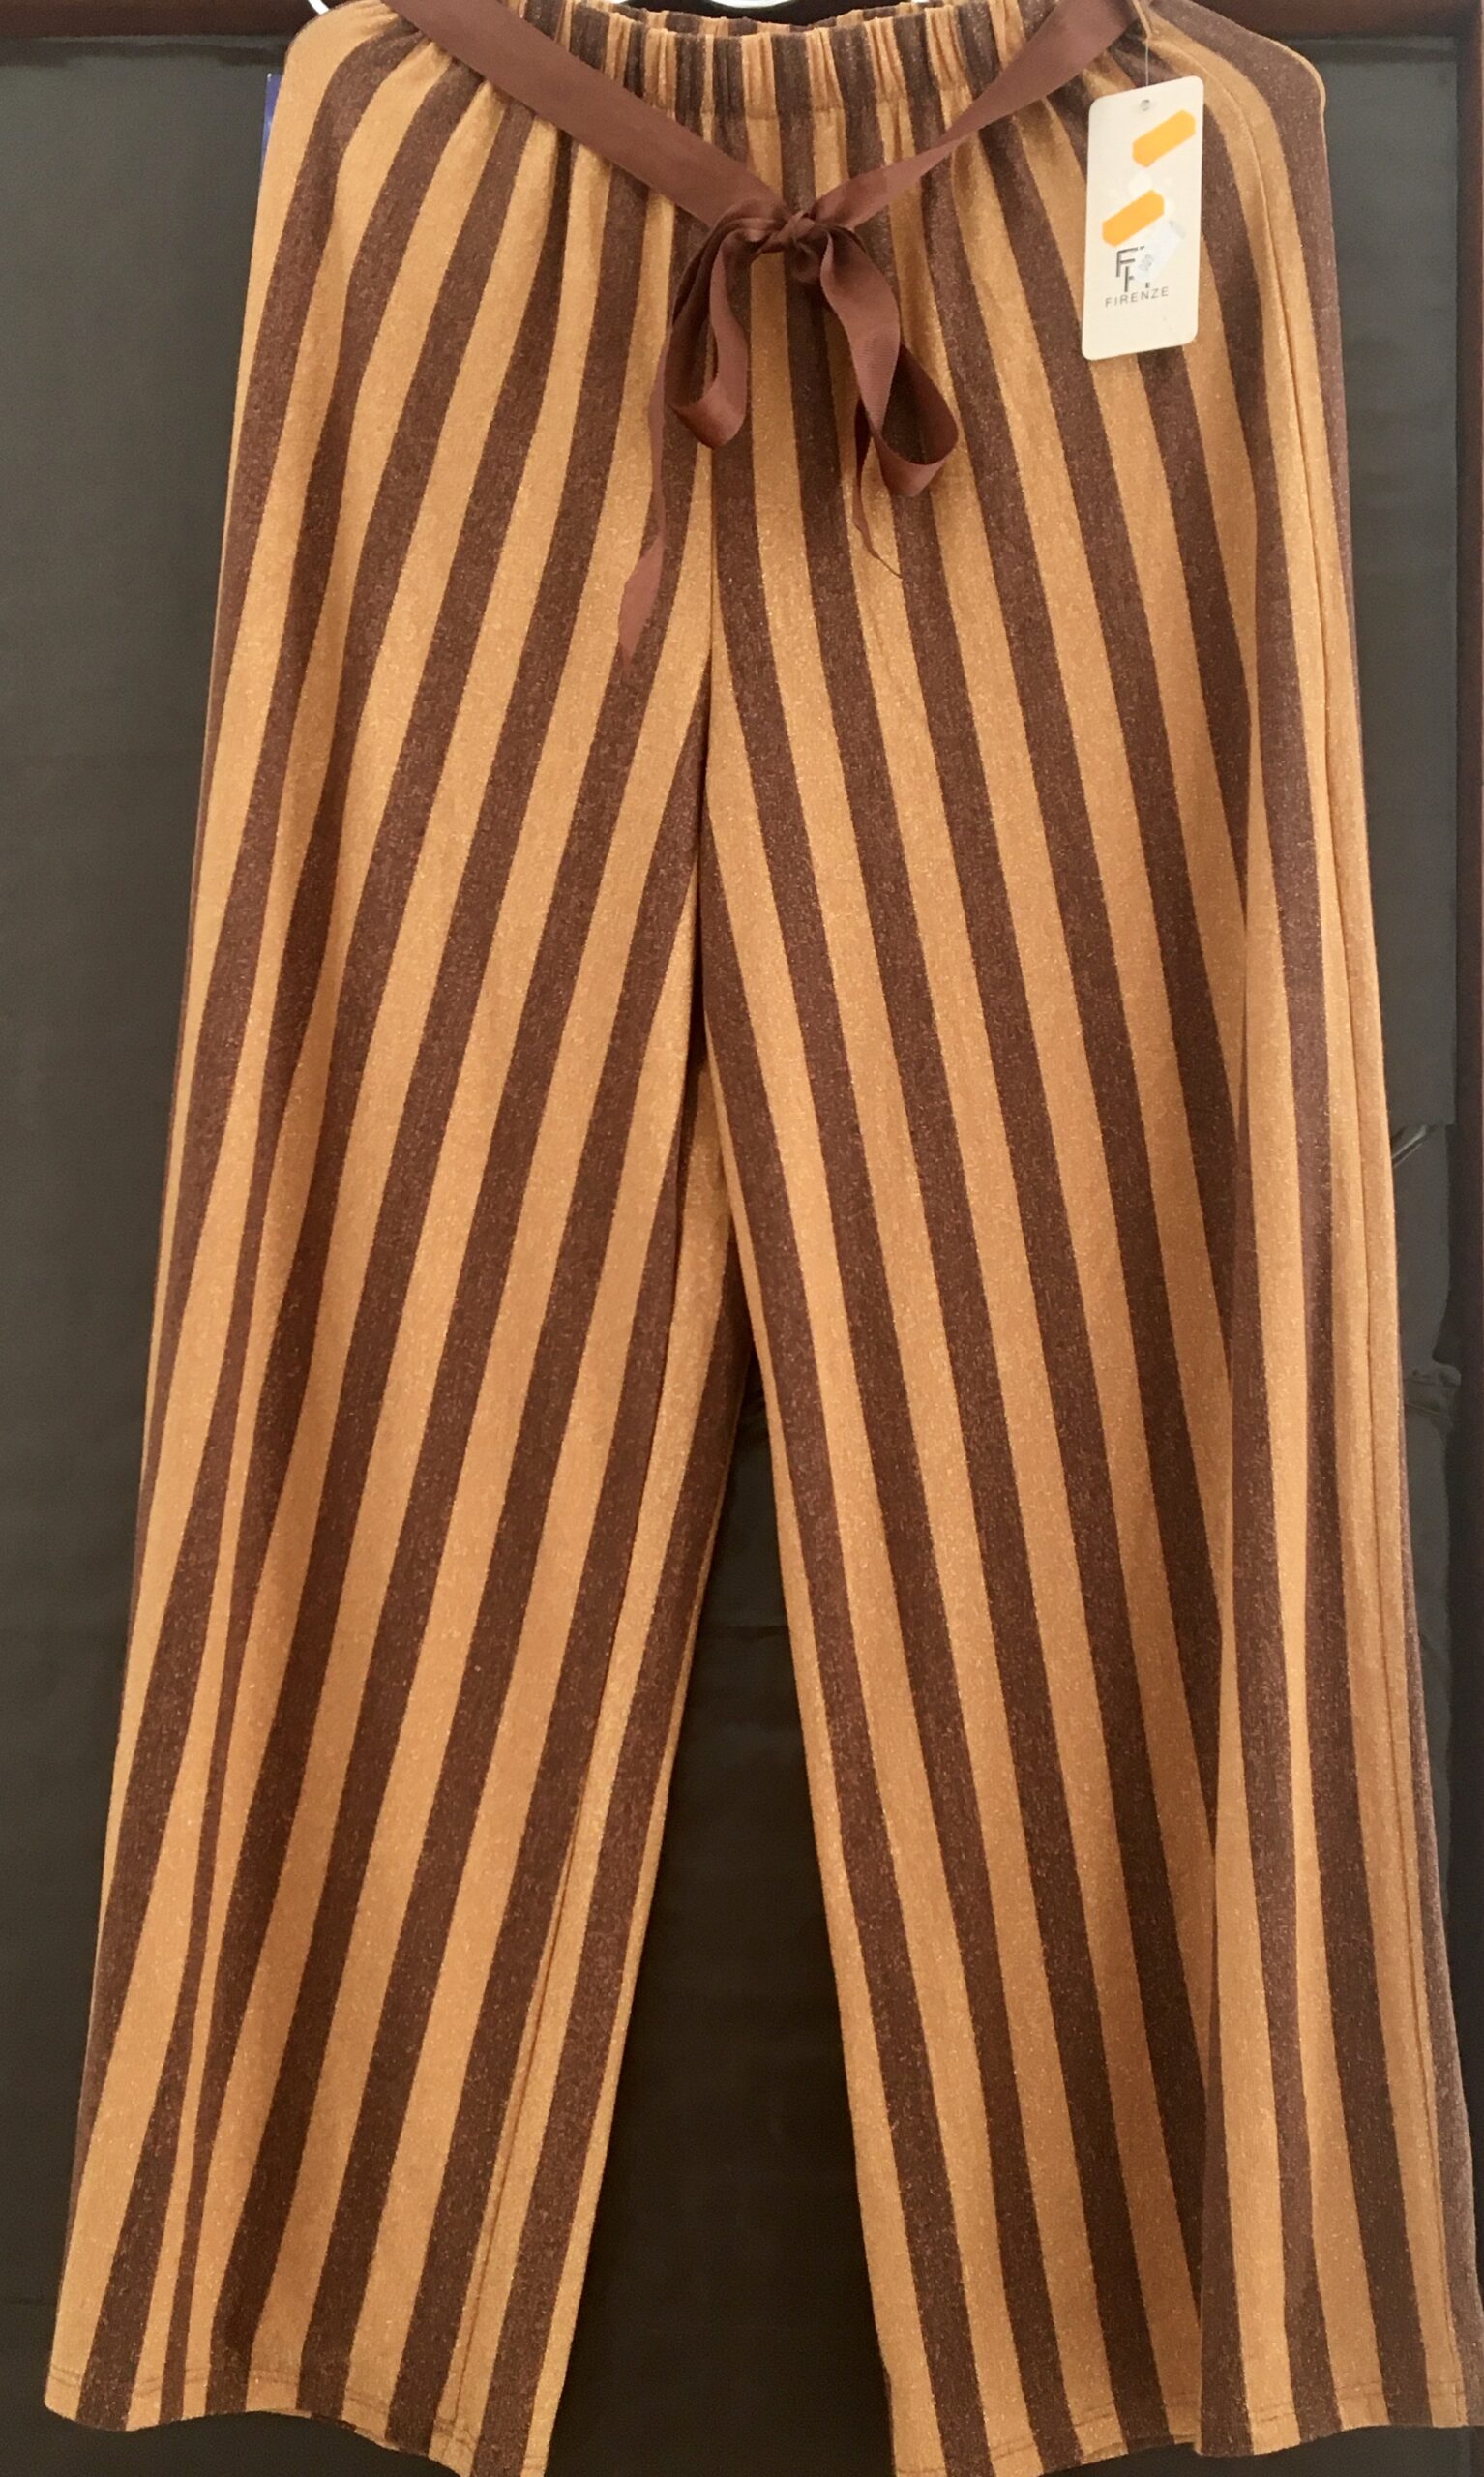 Pantaloni leggeri a righe Gallery Image